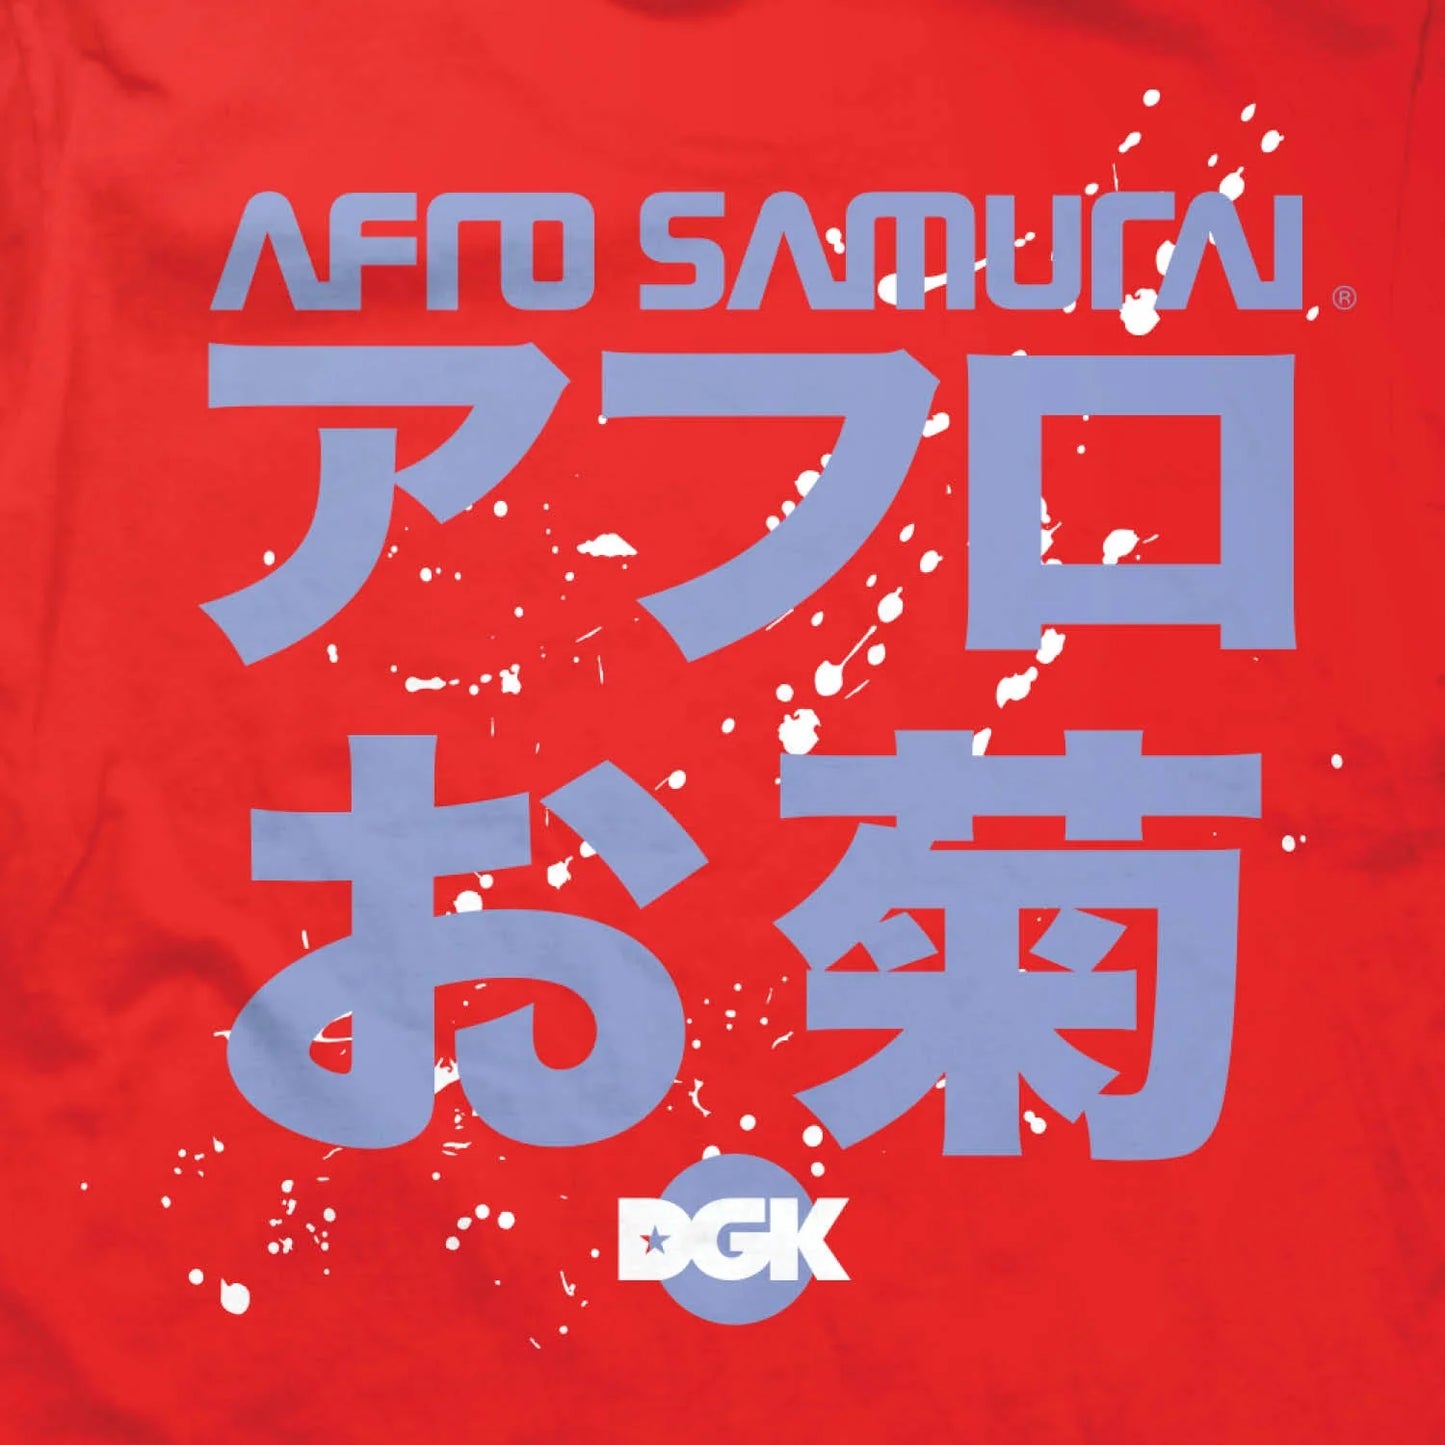 DGK X AFRO SAMURAI Okiku Graphic T-shirt